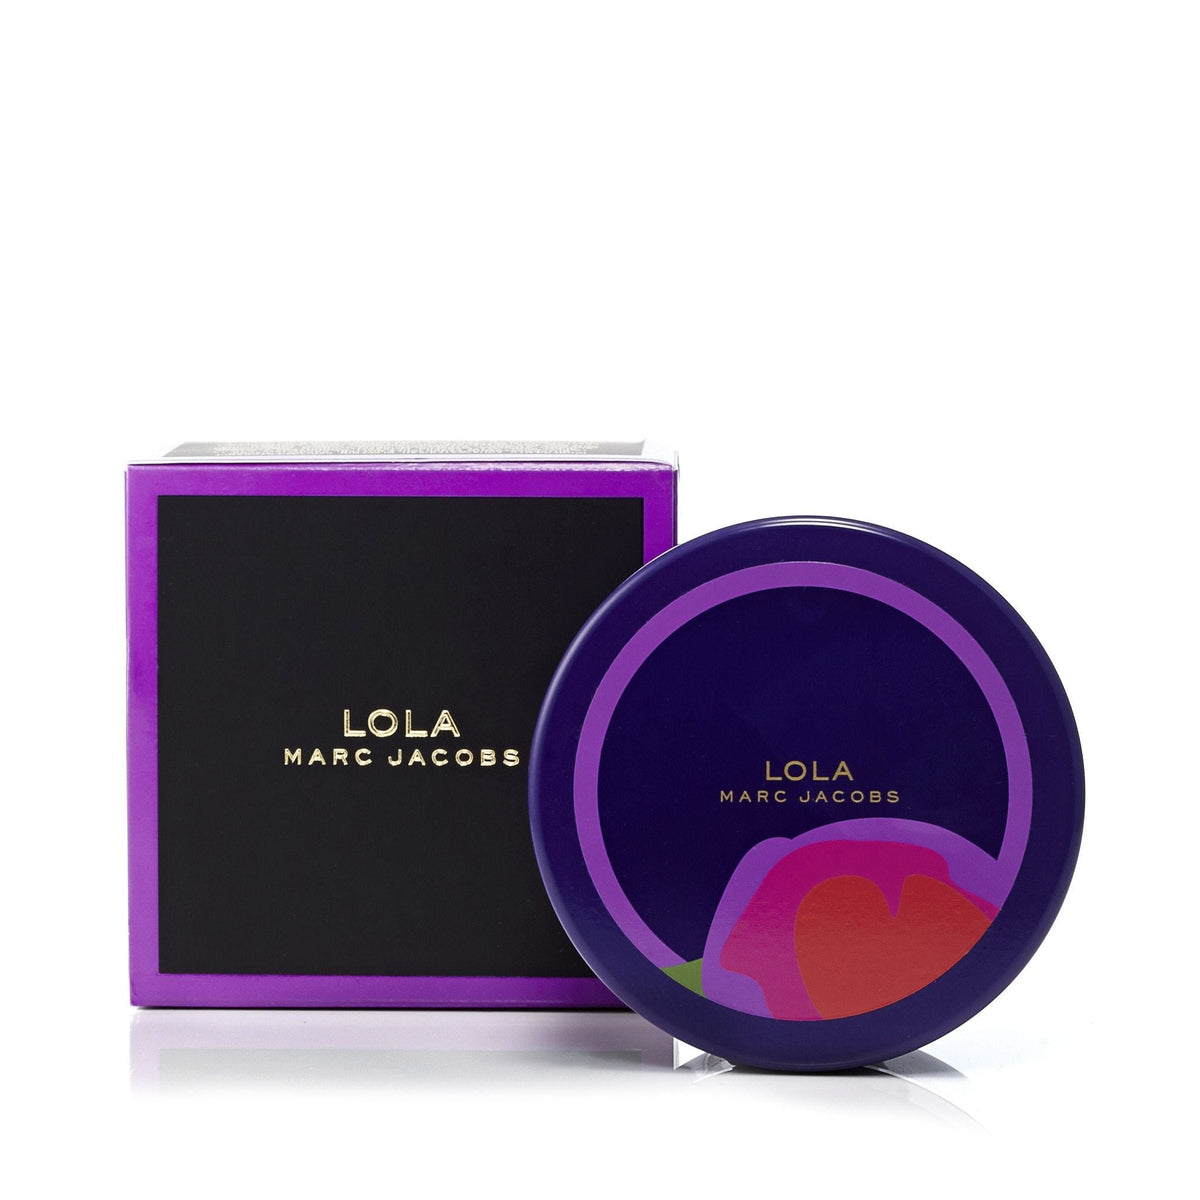 Lola Body Cream for Women by Marc Jacobs 4.9 oz.